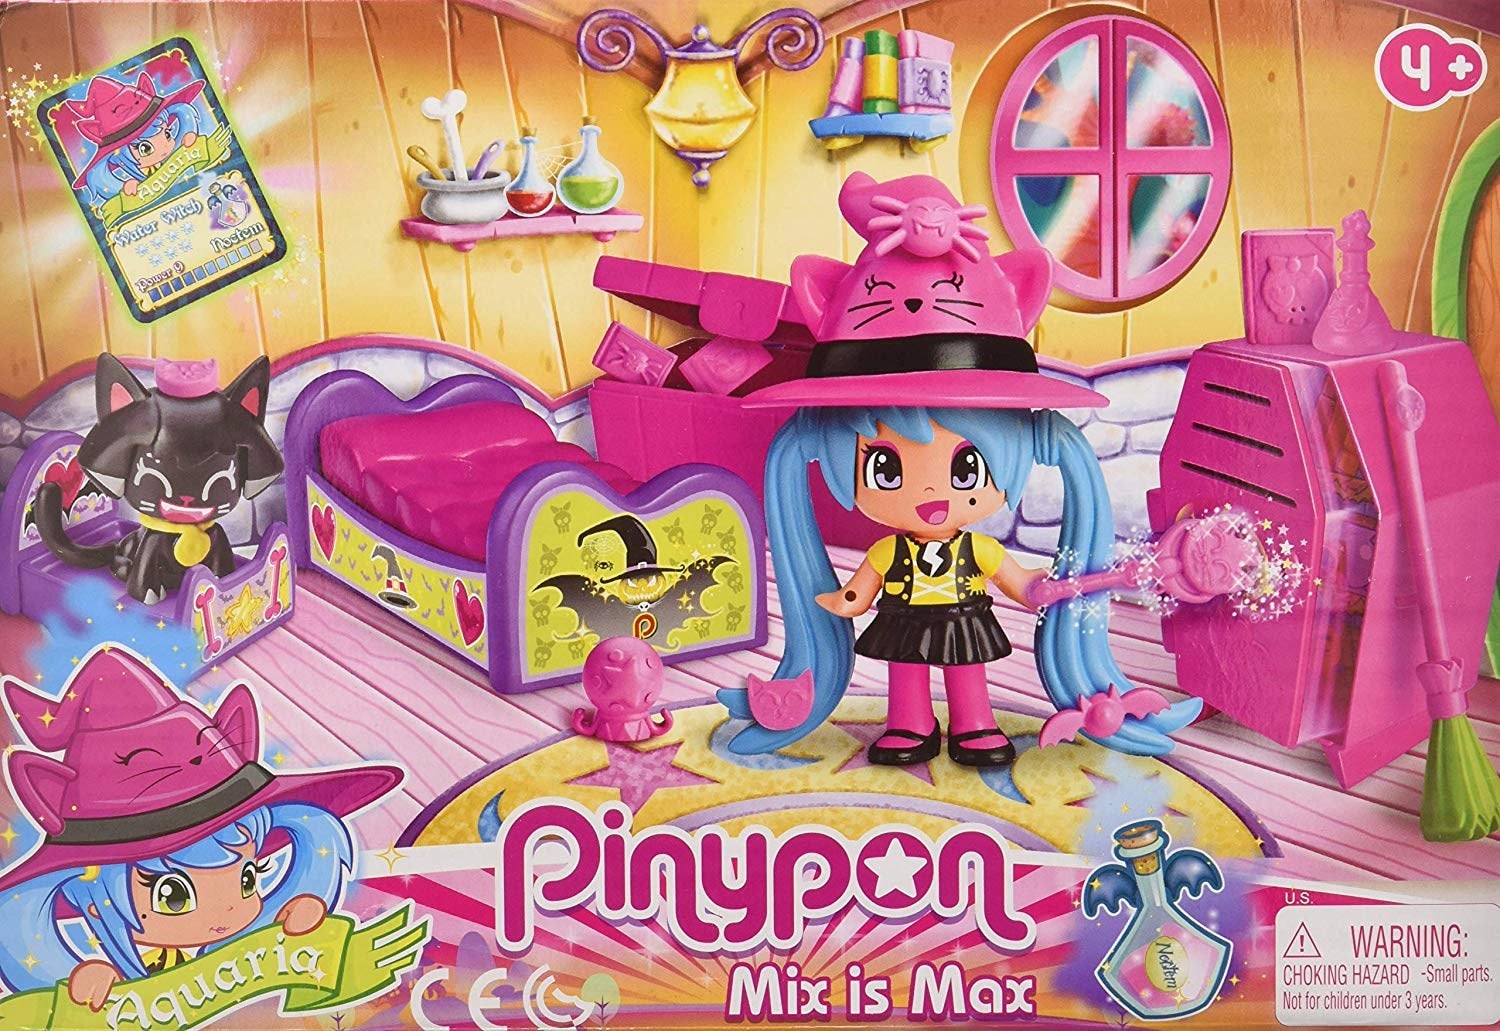 Figurine Pinypon ( jouer enfant ) - Pinypon